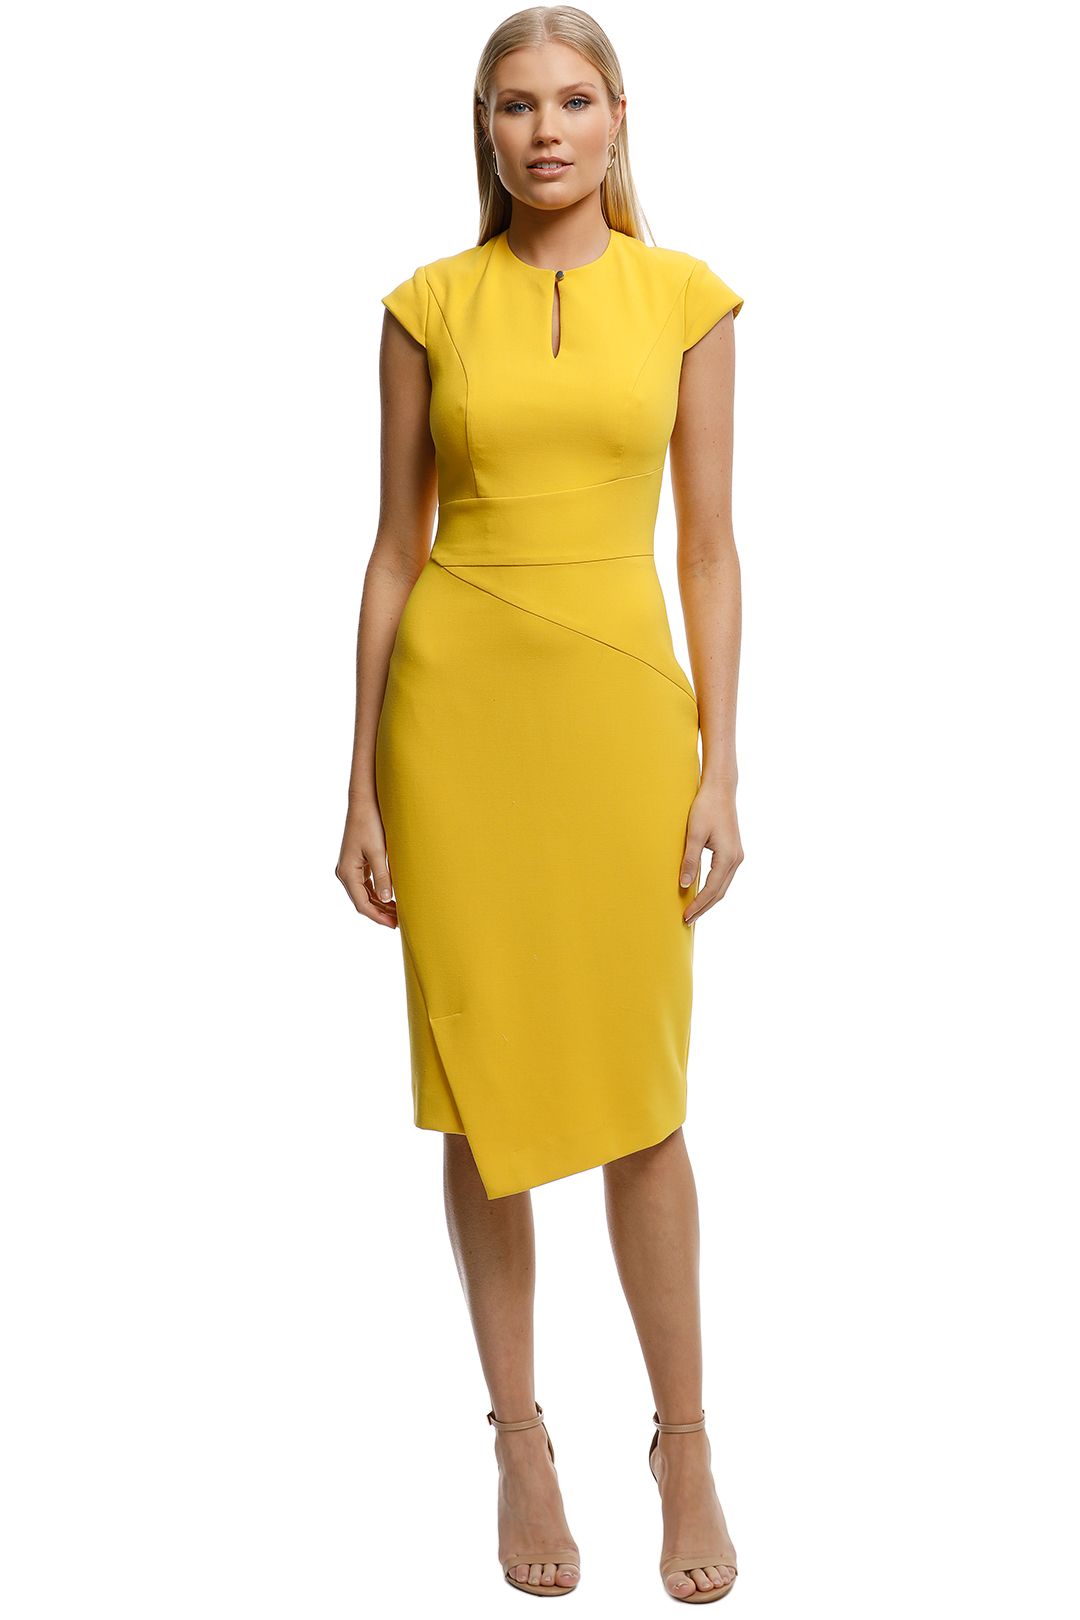 CUE-Mustard-Asymmetric-Pencil-Dress-Mustard-Front